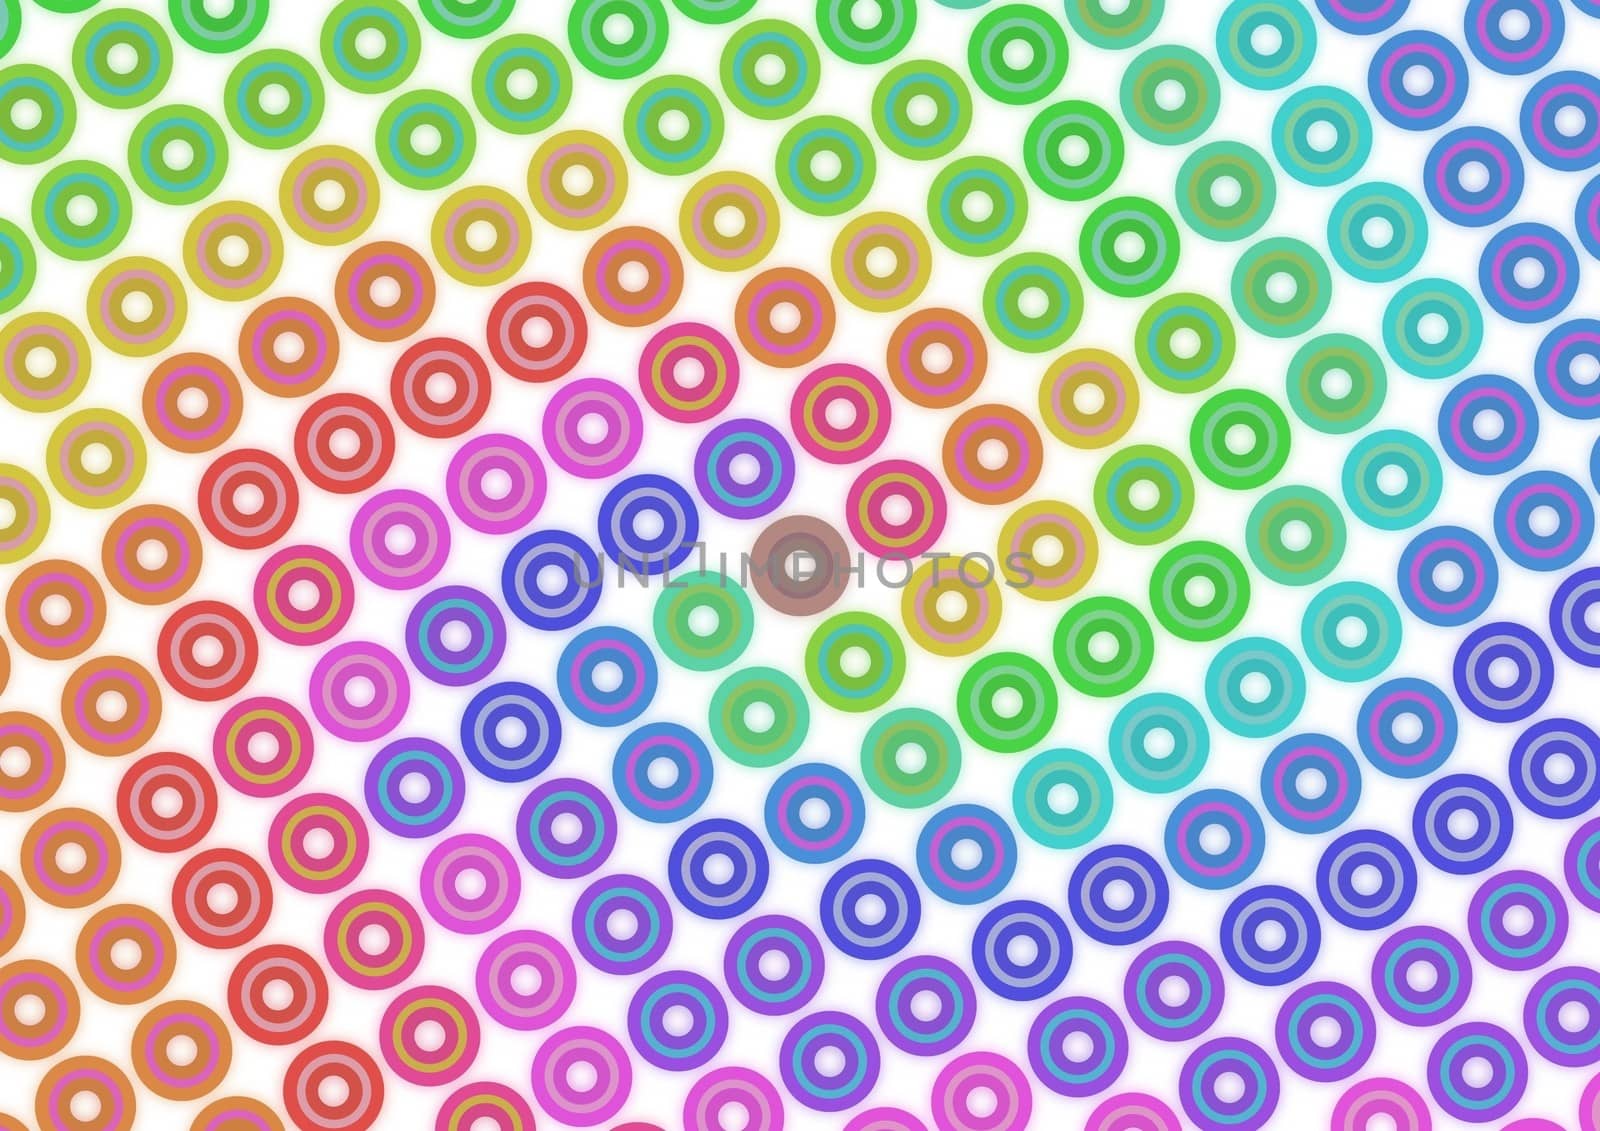 Multicoloured Circles by darrenwhittingham